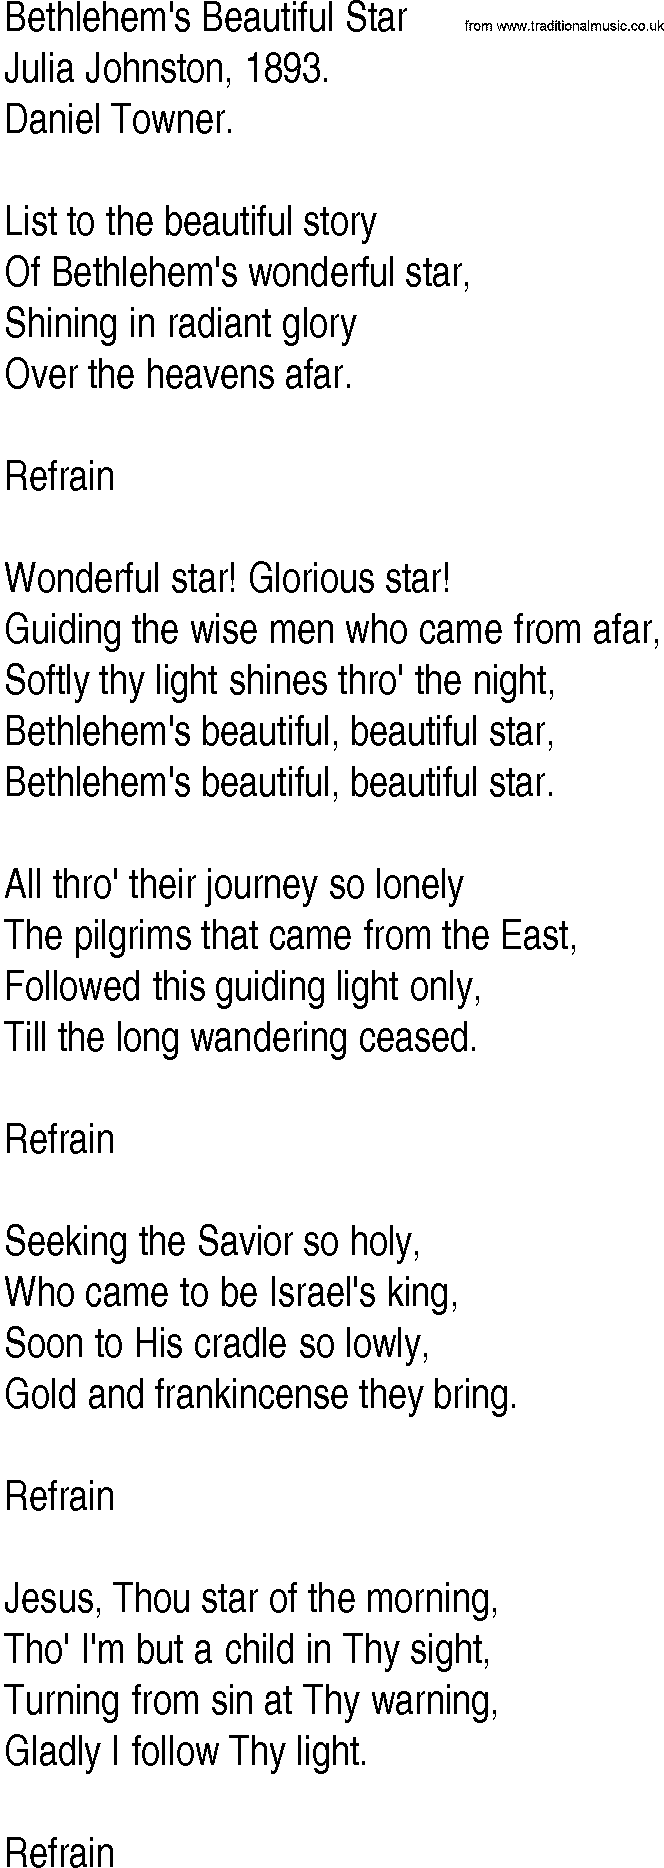 Hymn and Gospel Song Lyrics for Bethlehem's Beautiful Star by Julia